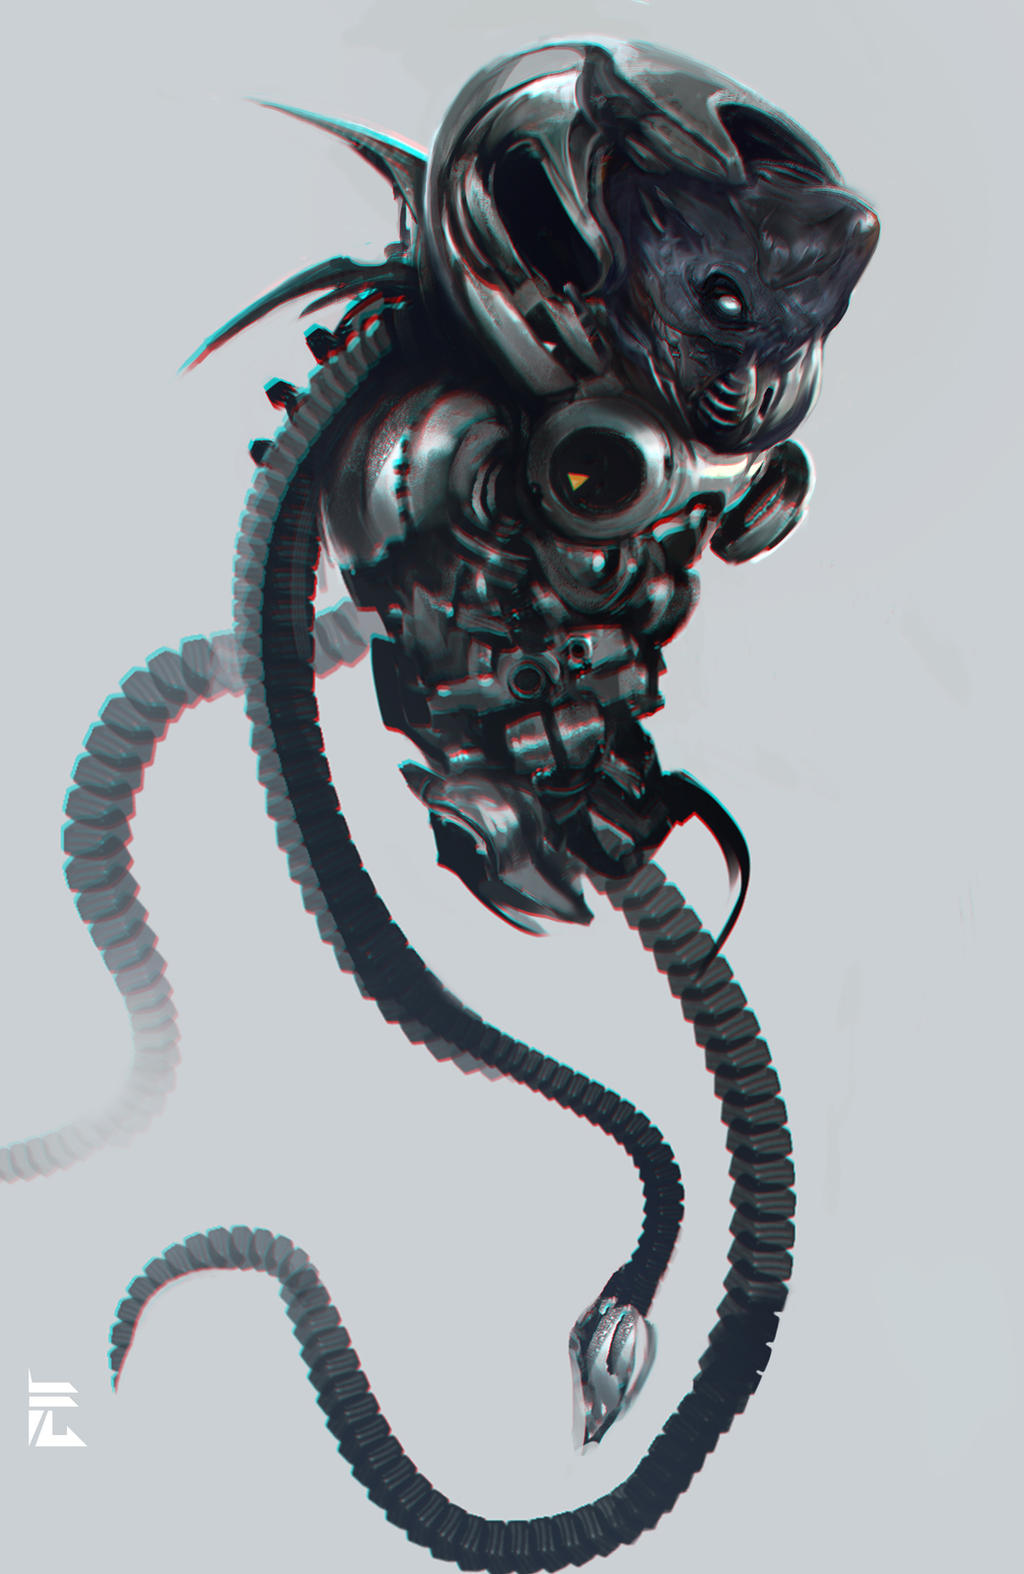 http://img12.deviantart.net/6dbc/i/2014/278/9/6/tentacle_alien_by_guesscui-d81rnty.jpg